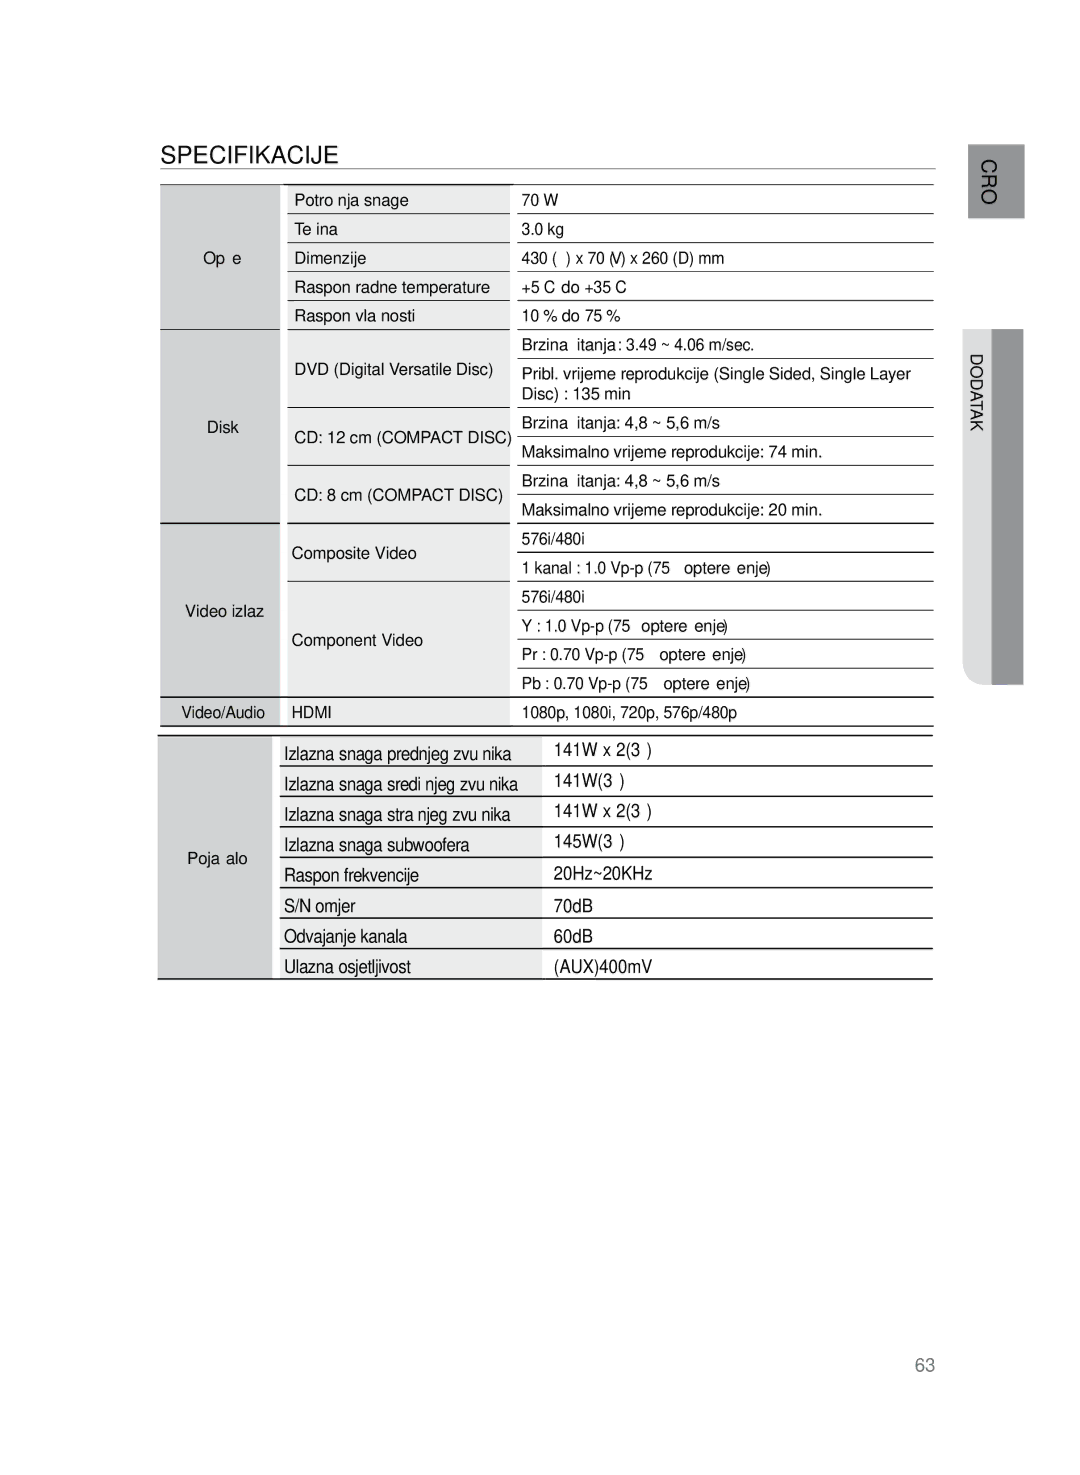 Samsung HT-TZ222R/XEE, HT-TZ222R/EDC, HT-Z220R/EDC Specifikacije, Izlazna snaga prednjeg zvučnika 141W x 23Ω, 141W3Ω, Hdmi 